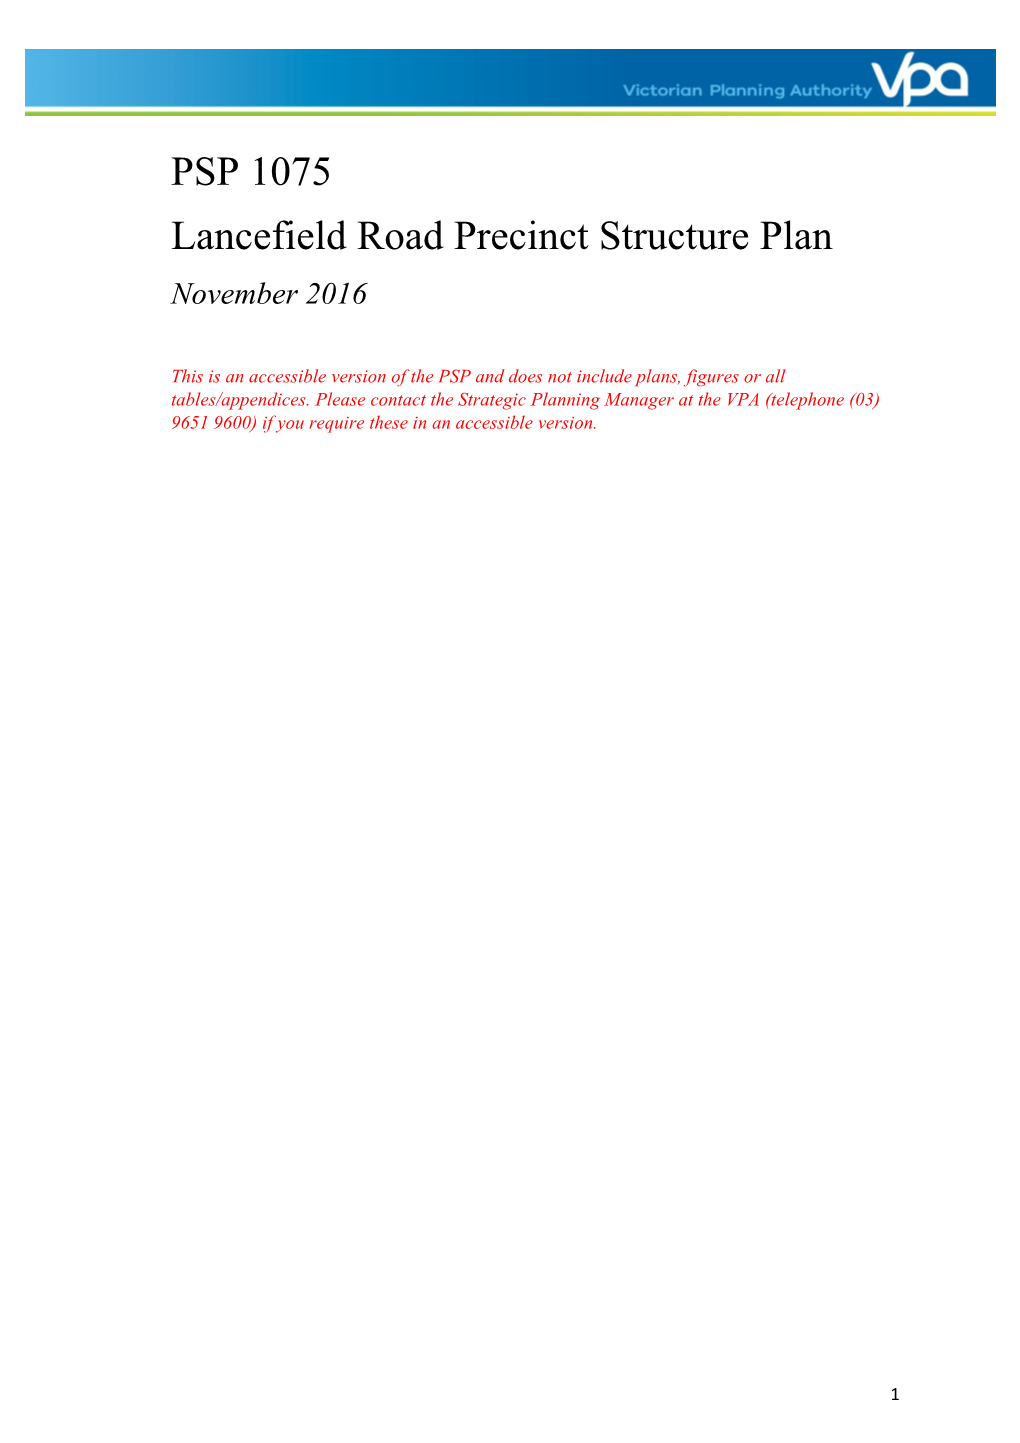 Lancefield Road Precinct Structure Plan